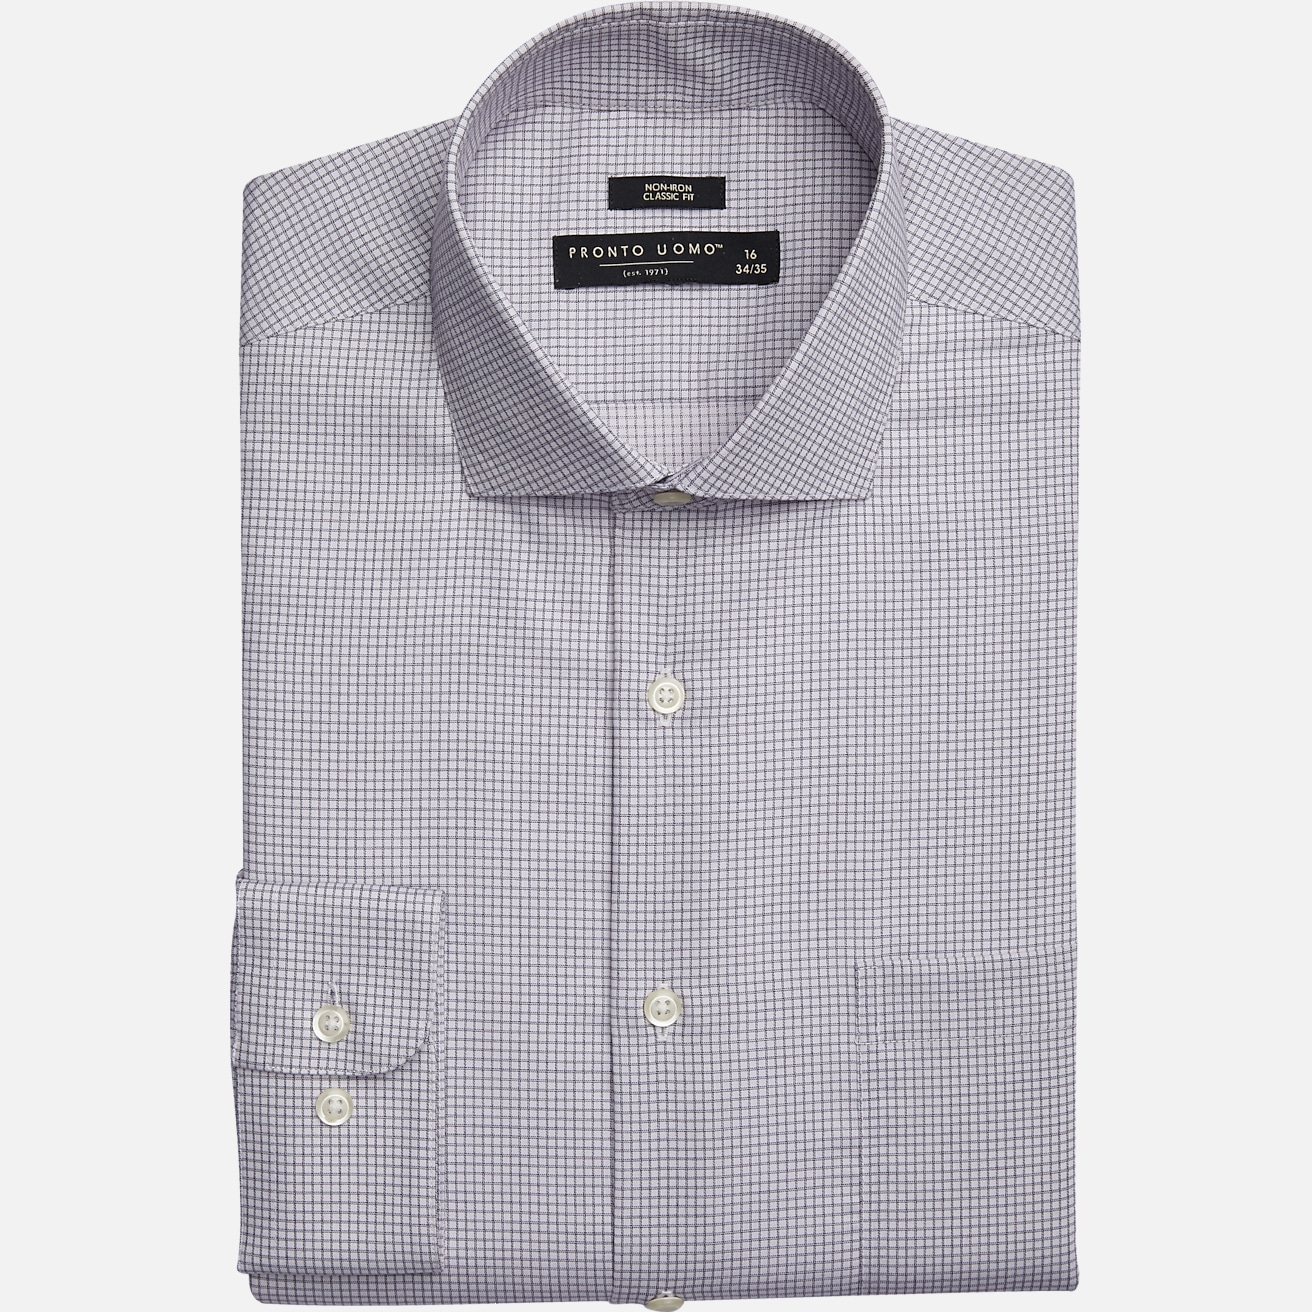 Pronto Uomo Big & Tall Men's Classic Fit Spread Collar Dress Shirt at Men's Wearhouse, Lavender Check / Purple - Size: 18 34/35